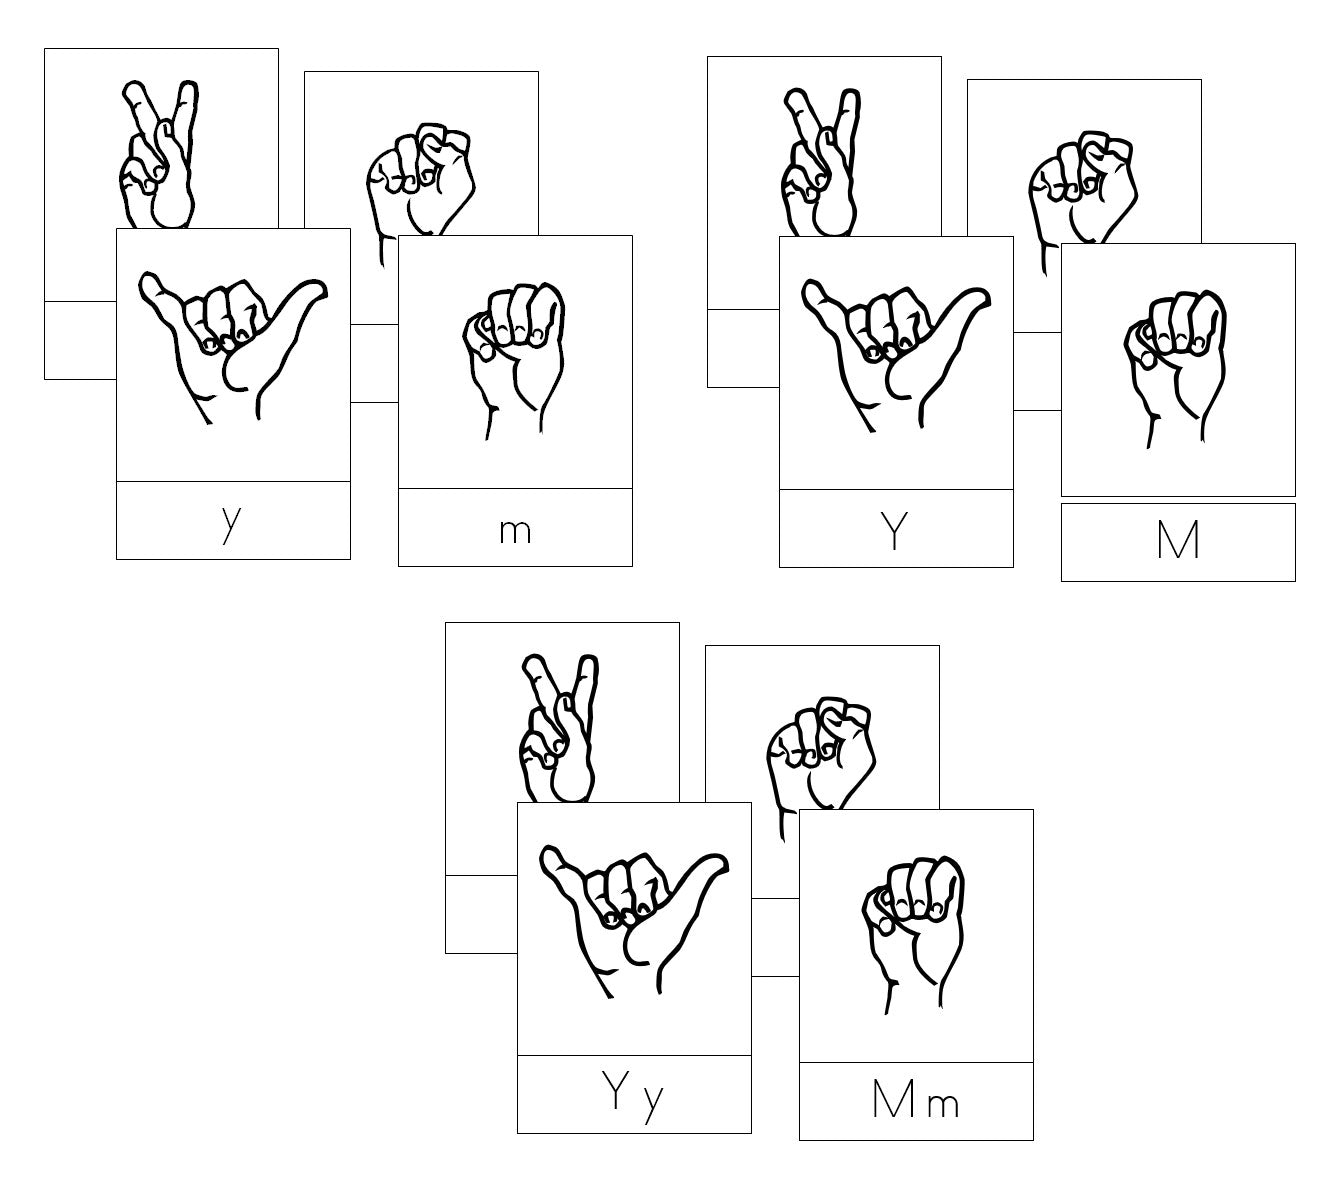 新規出店 Sign Language Wt Cards 知育玩具